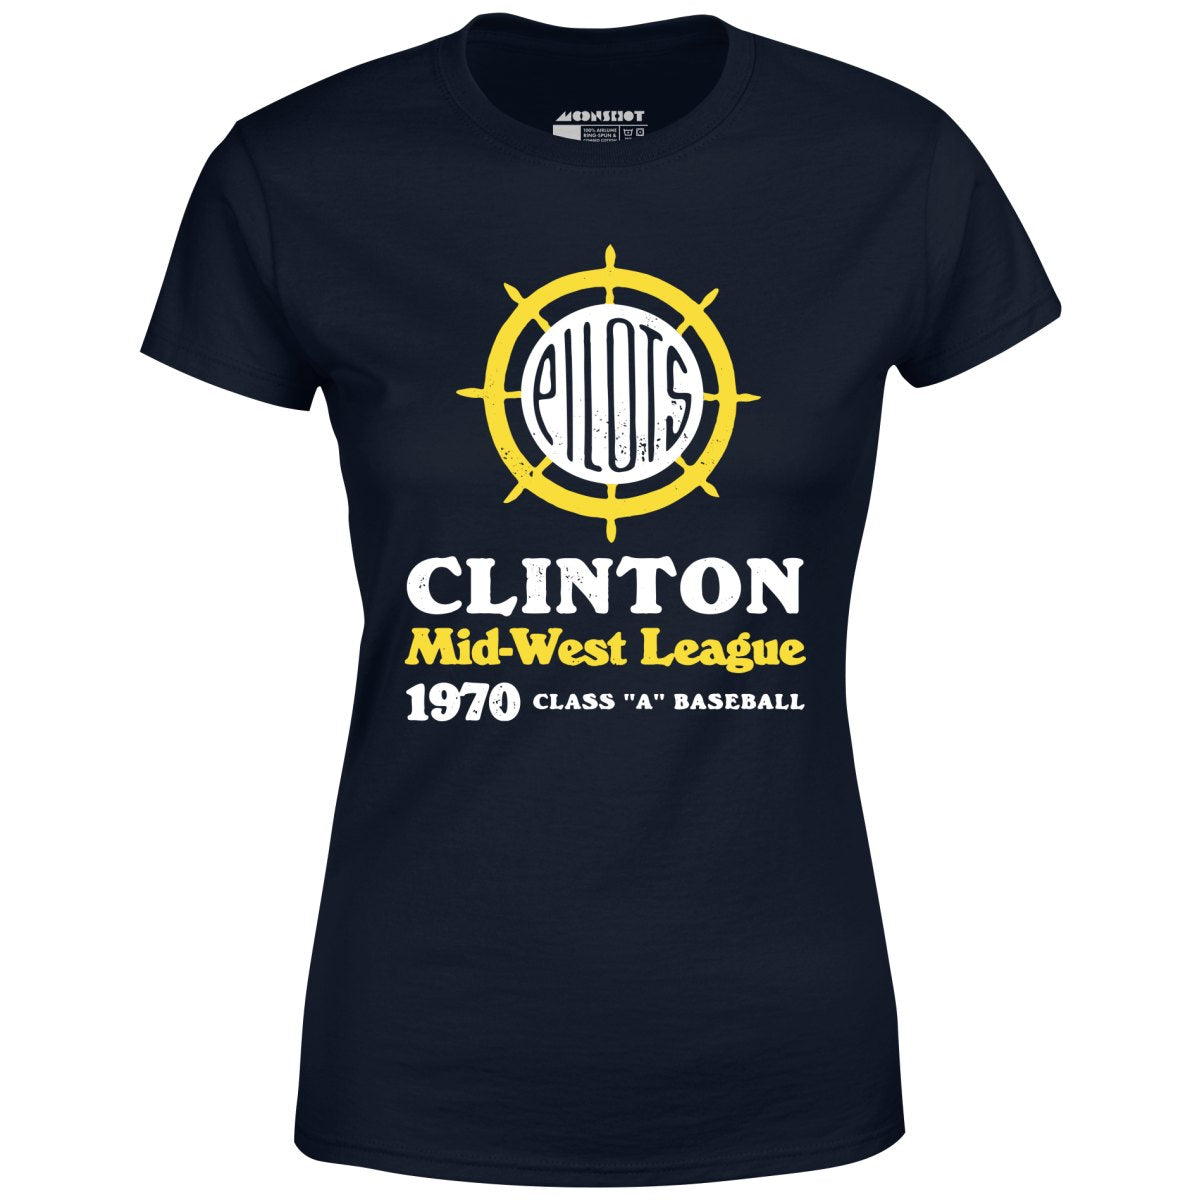 Clinton Pilots - Iowa - Vintage Defunct Baseball Teams - Women's T-Shirt